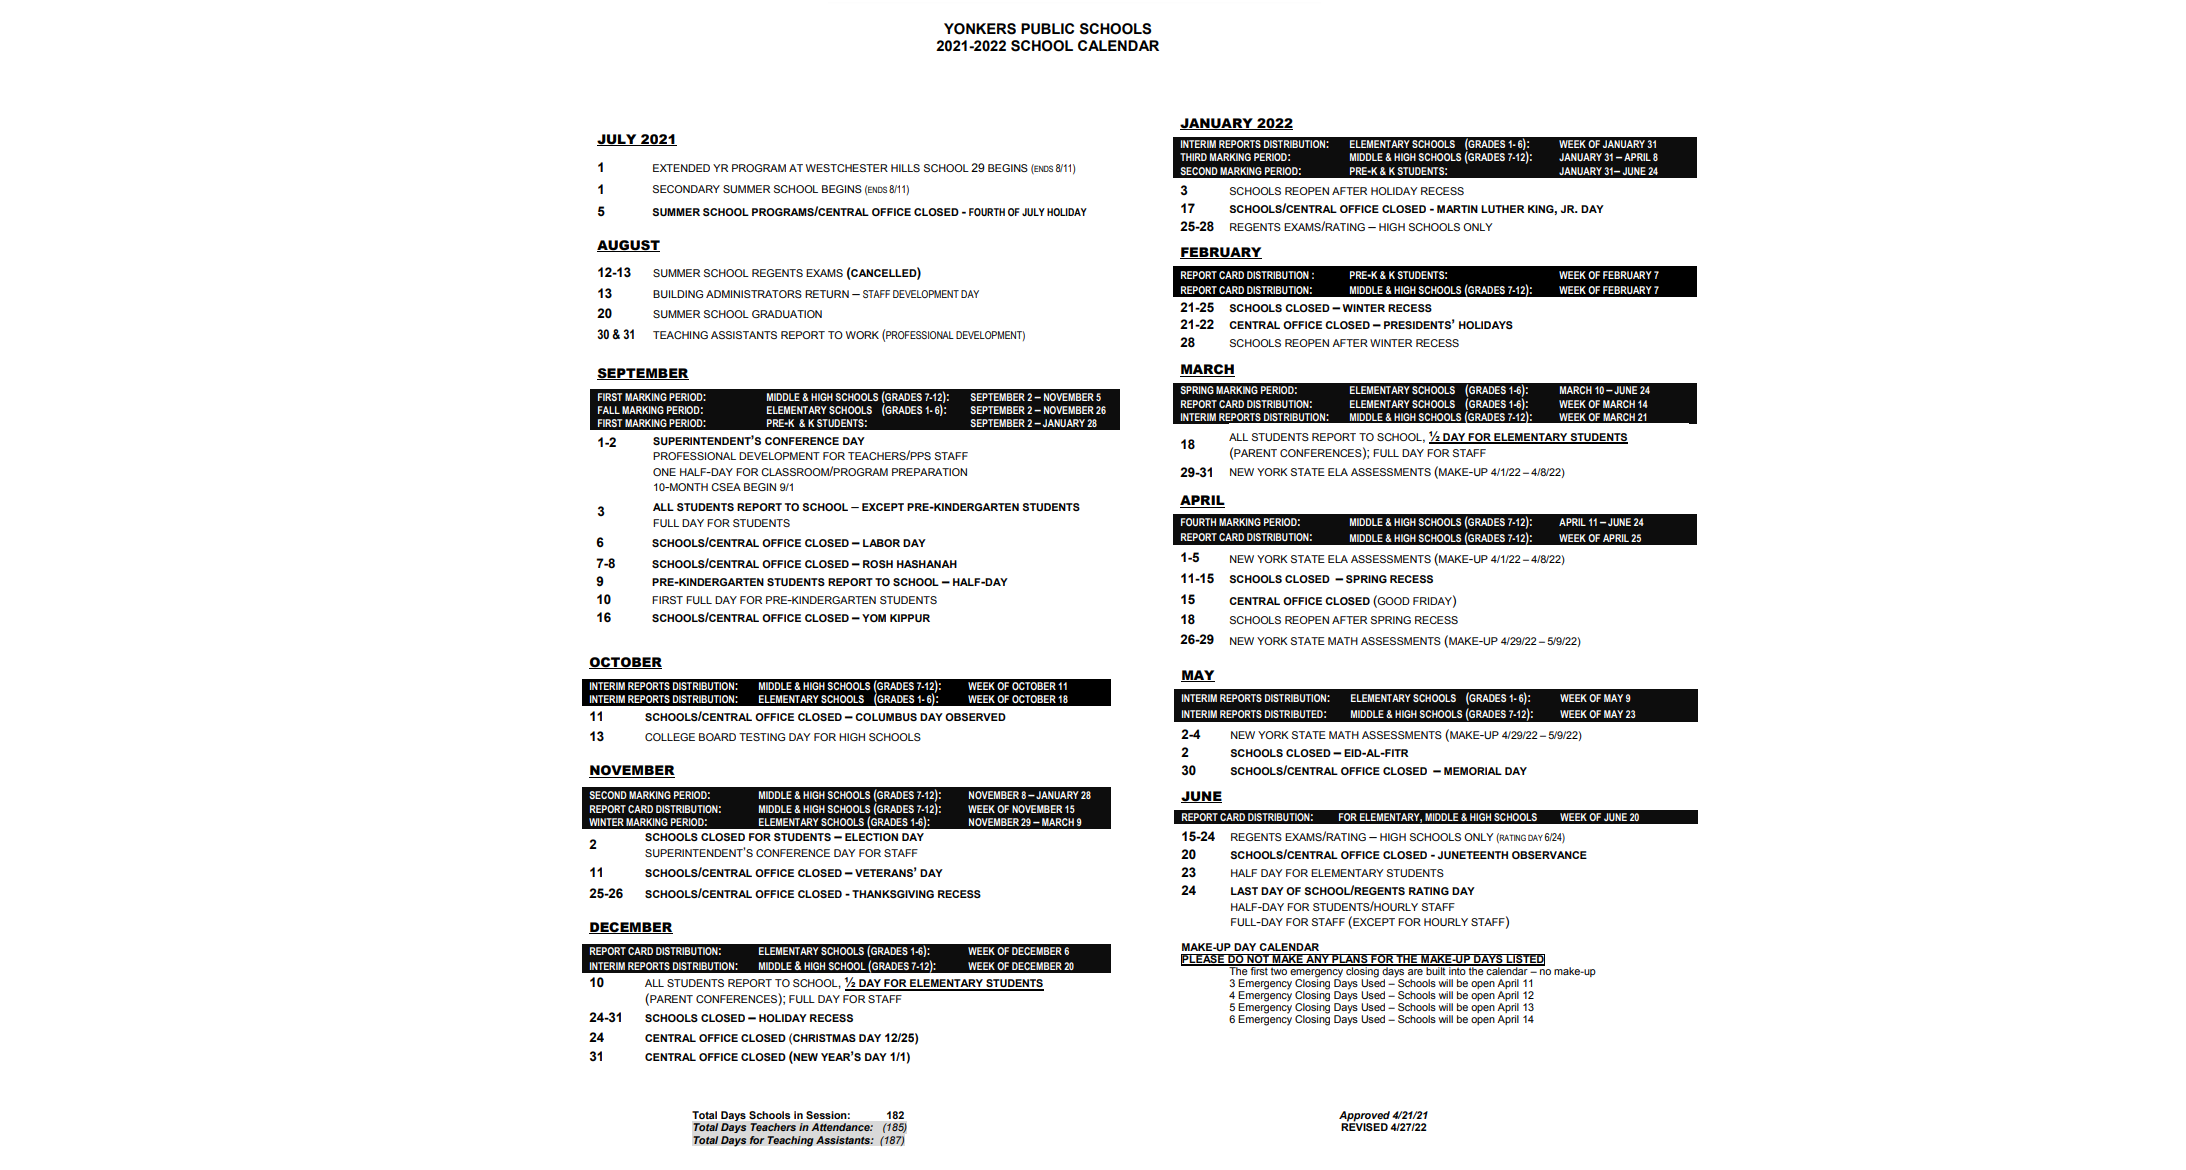 District School Academic Calendar Key for School 17